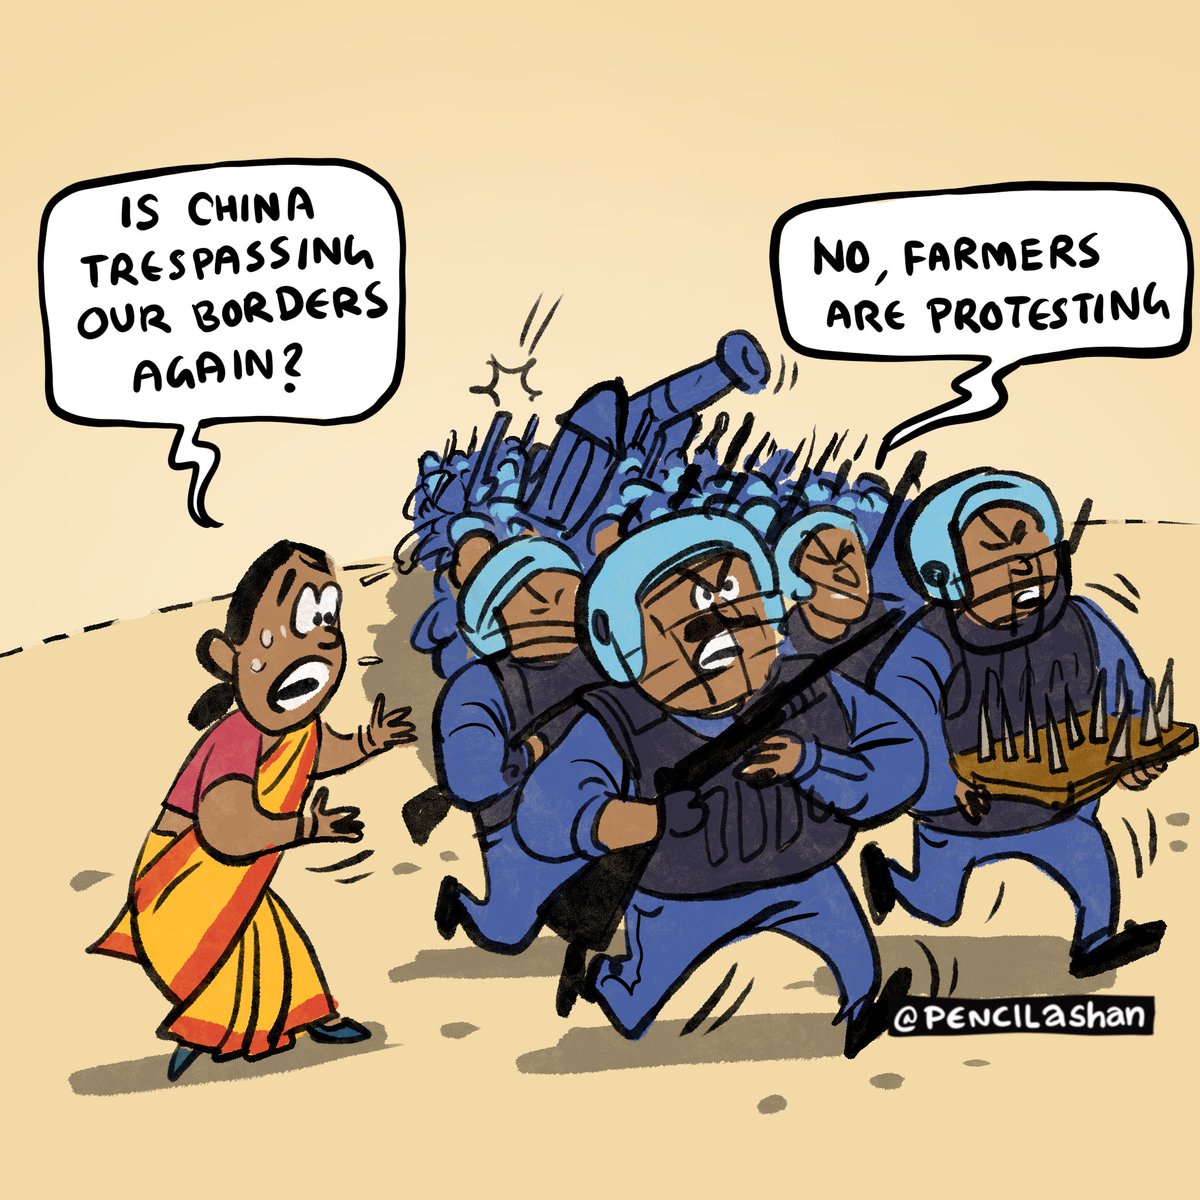 #Farmersprotest #dillichalo #haryana #indianfarmers #indian #india